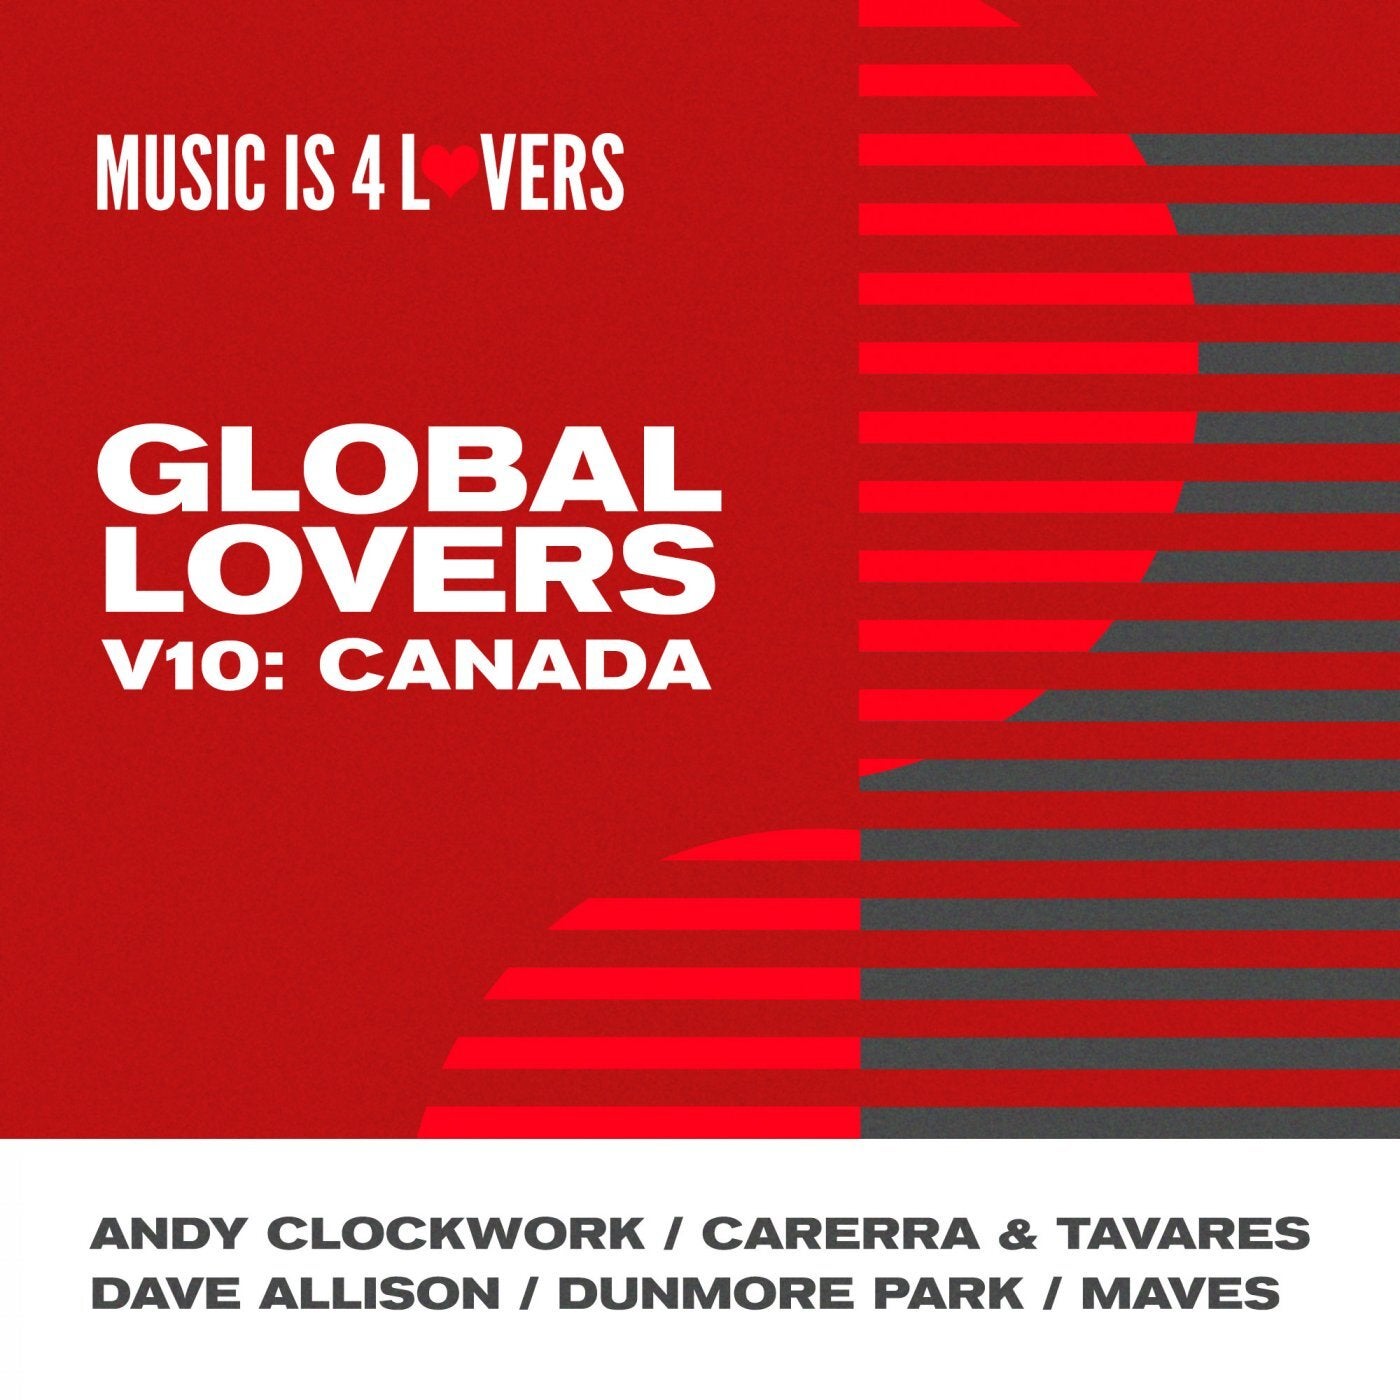 Global Lovers V10: Canada